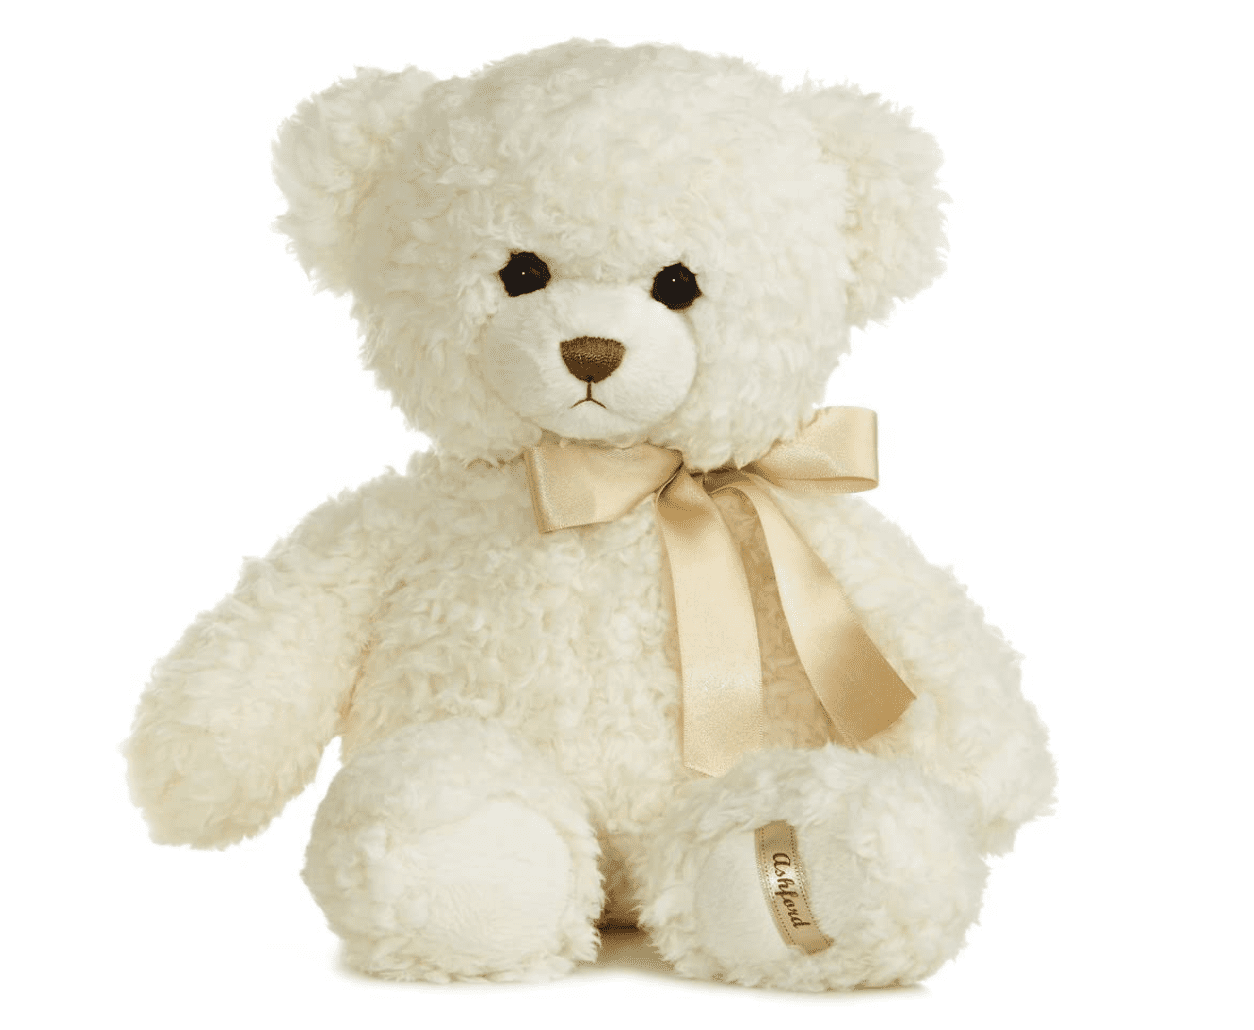 Fuzzy Teddy Bear